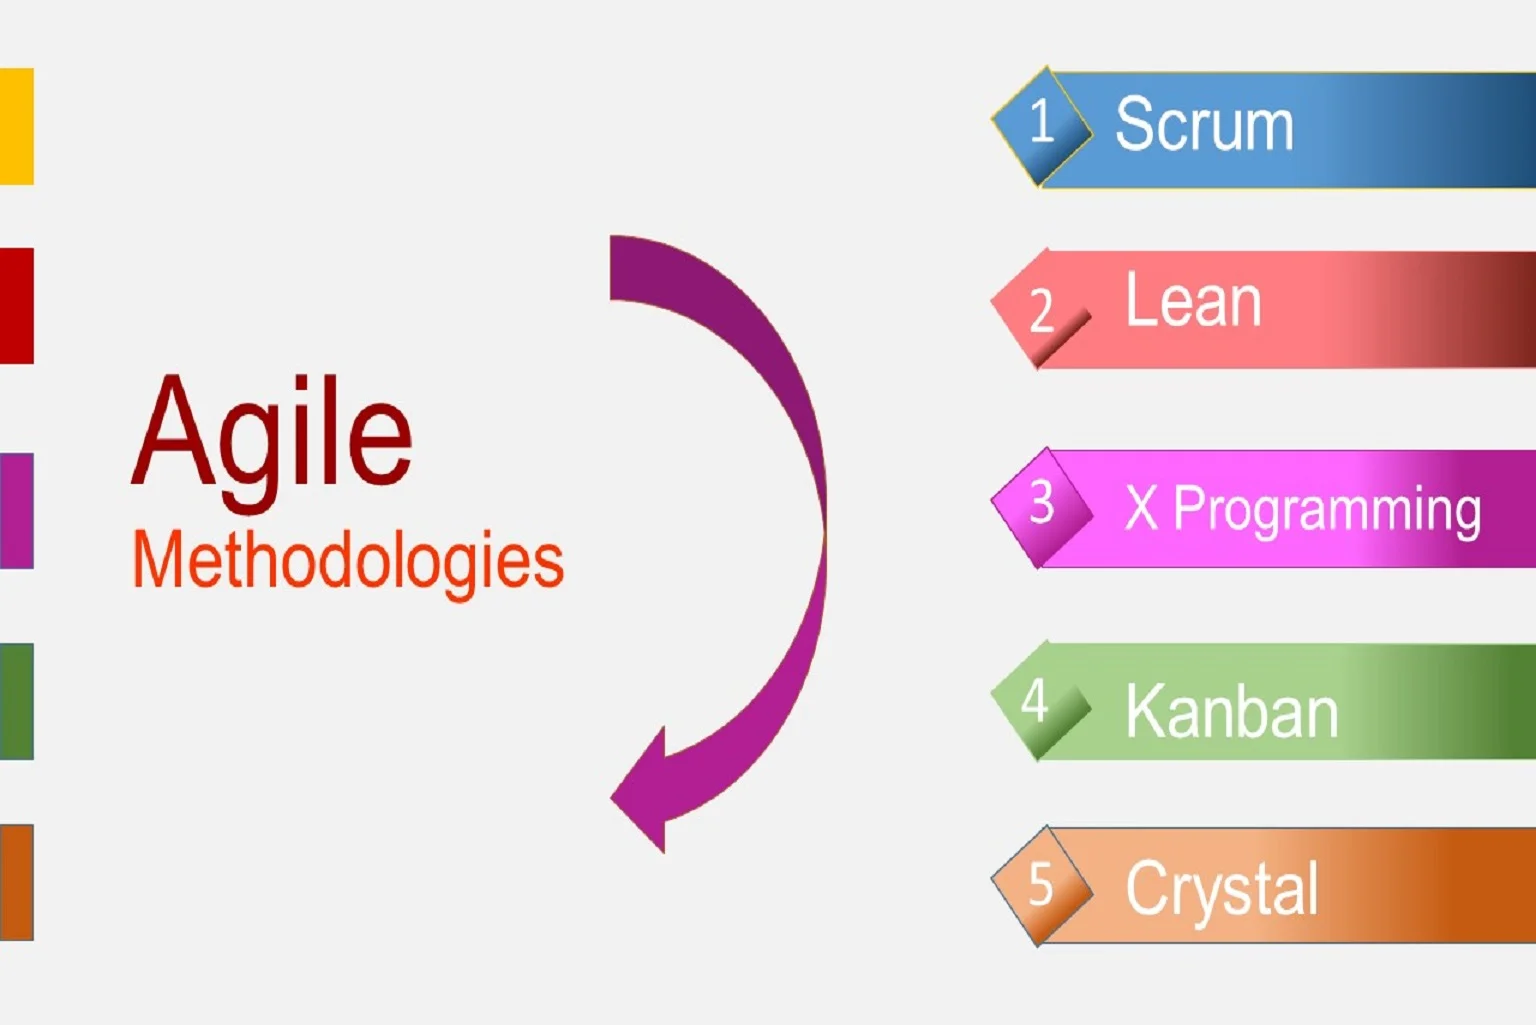 What are the agile methodologies?